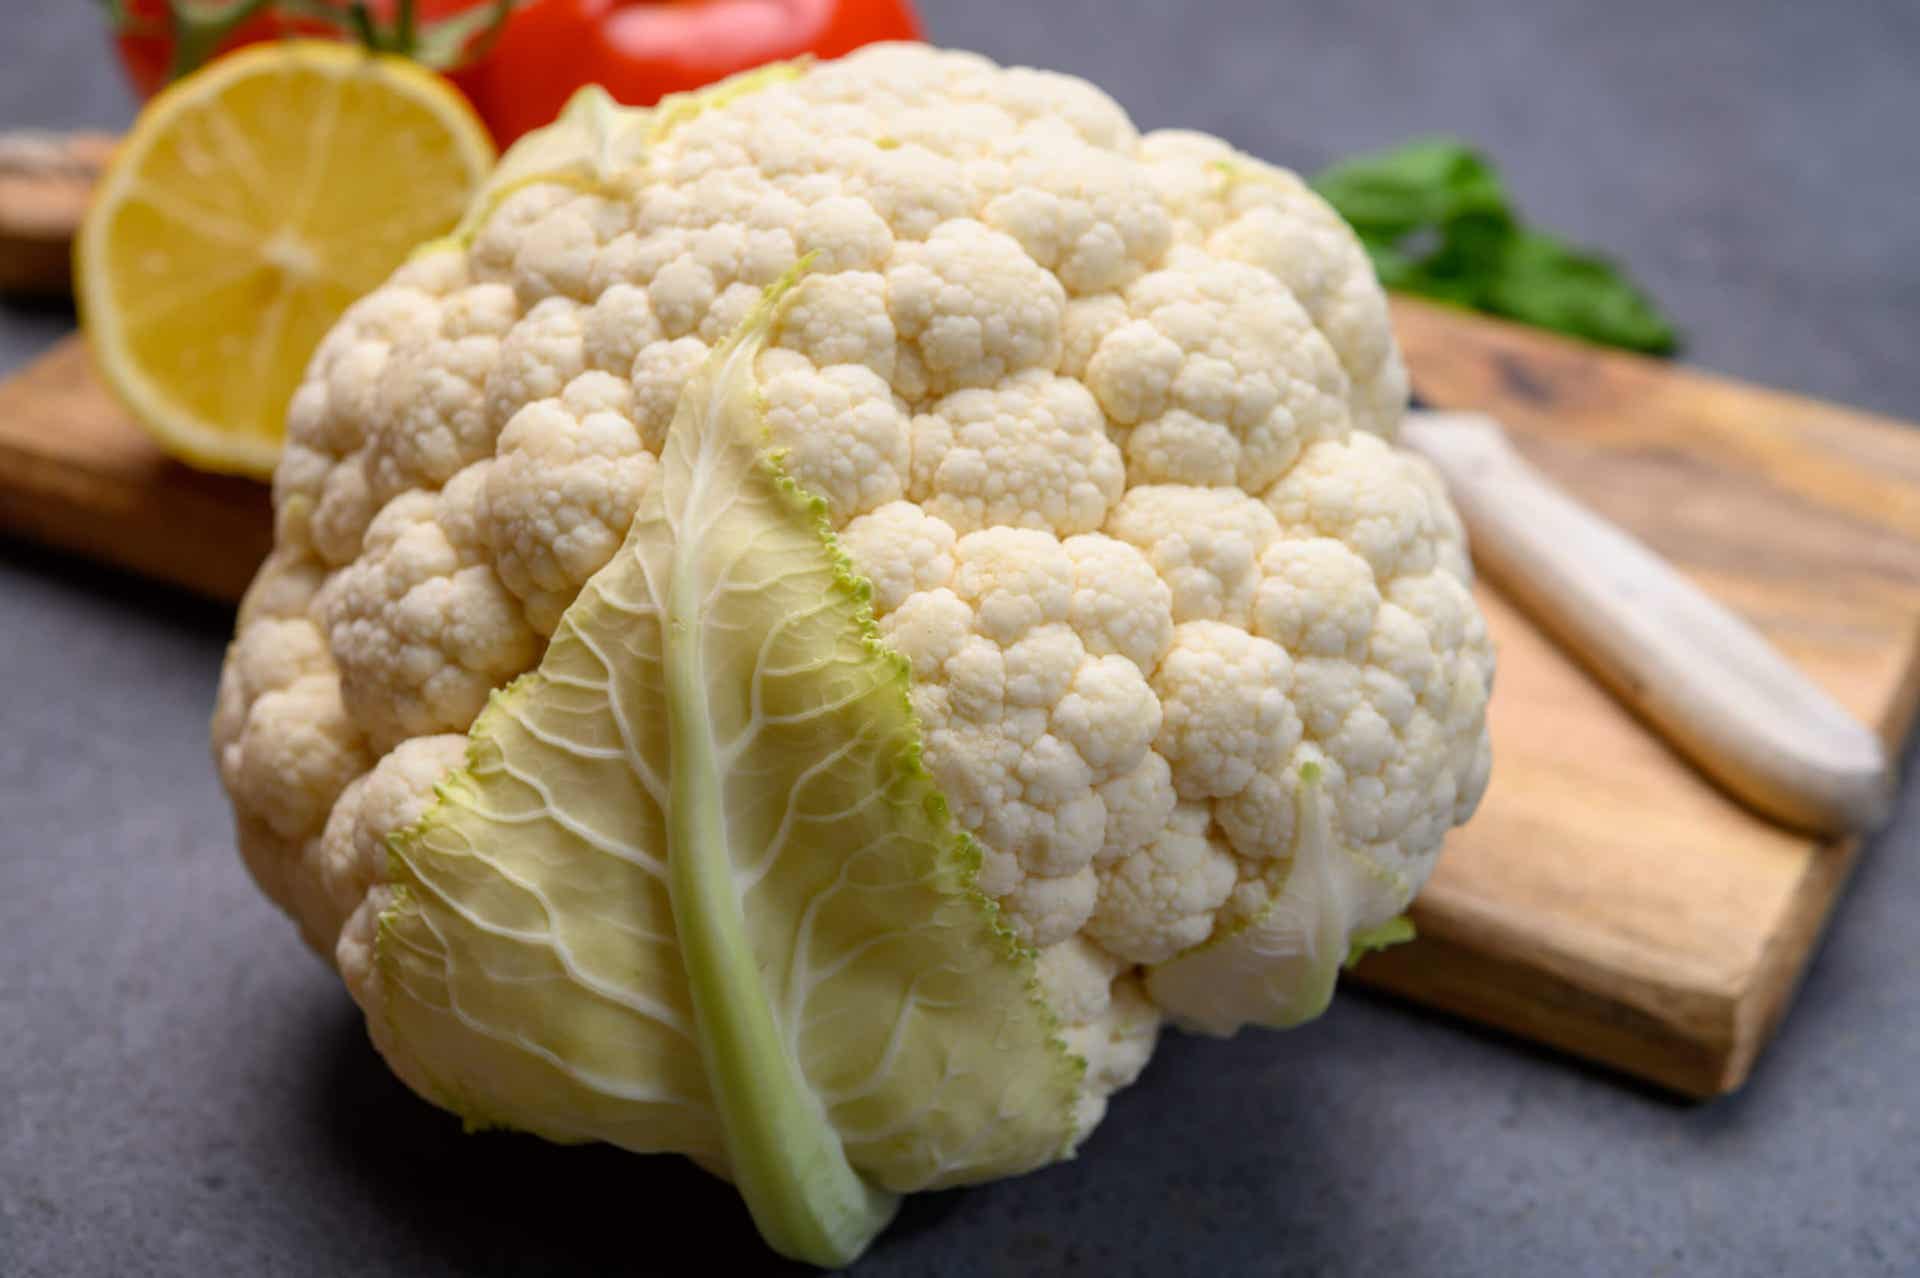 cauliflower has glutathione